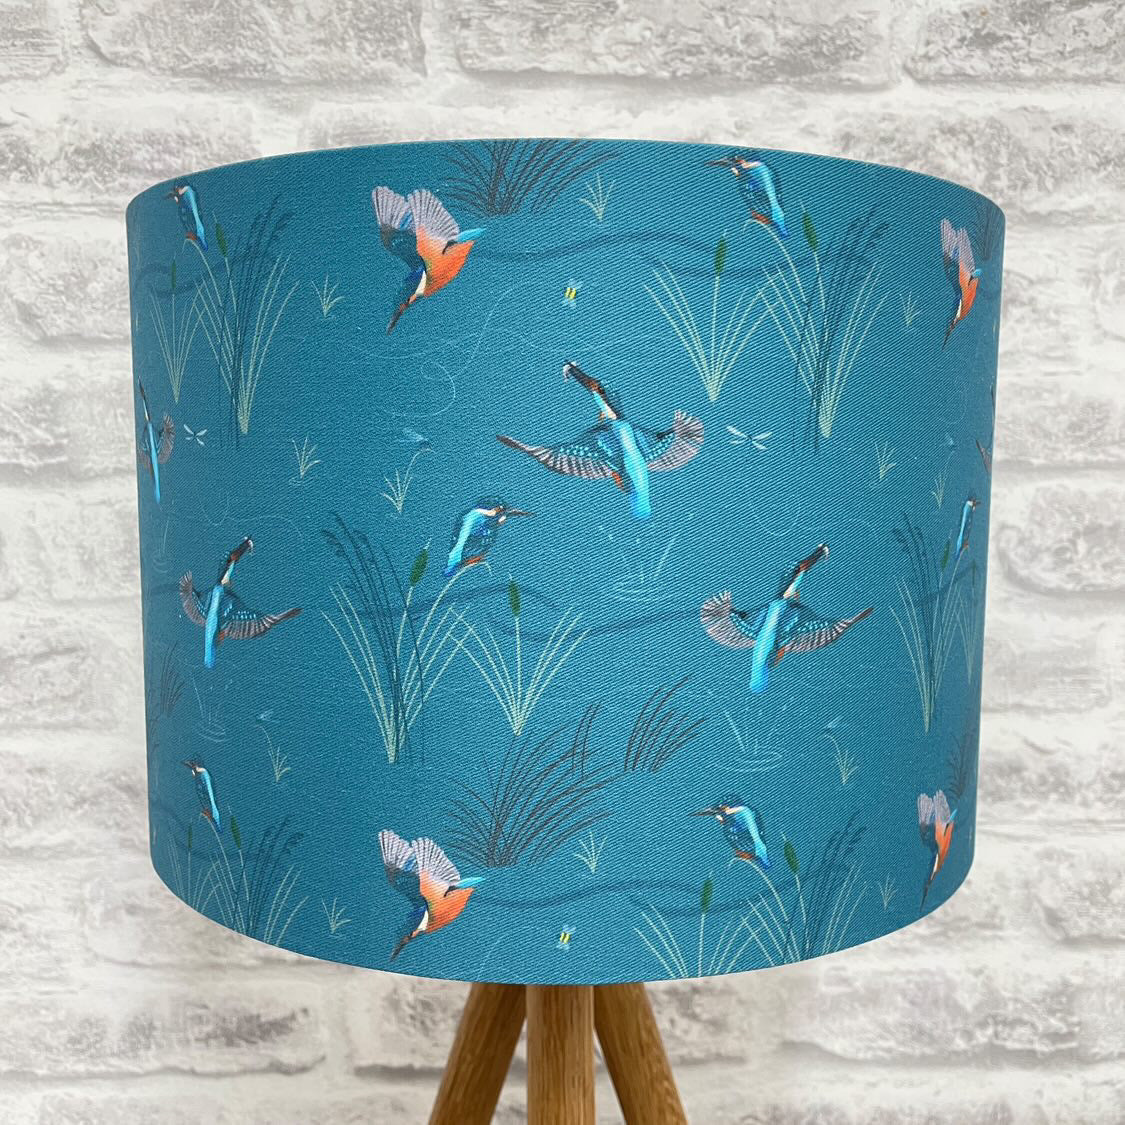 Kingfishers repeat pattern 30cm drum lampshade with metallic inner